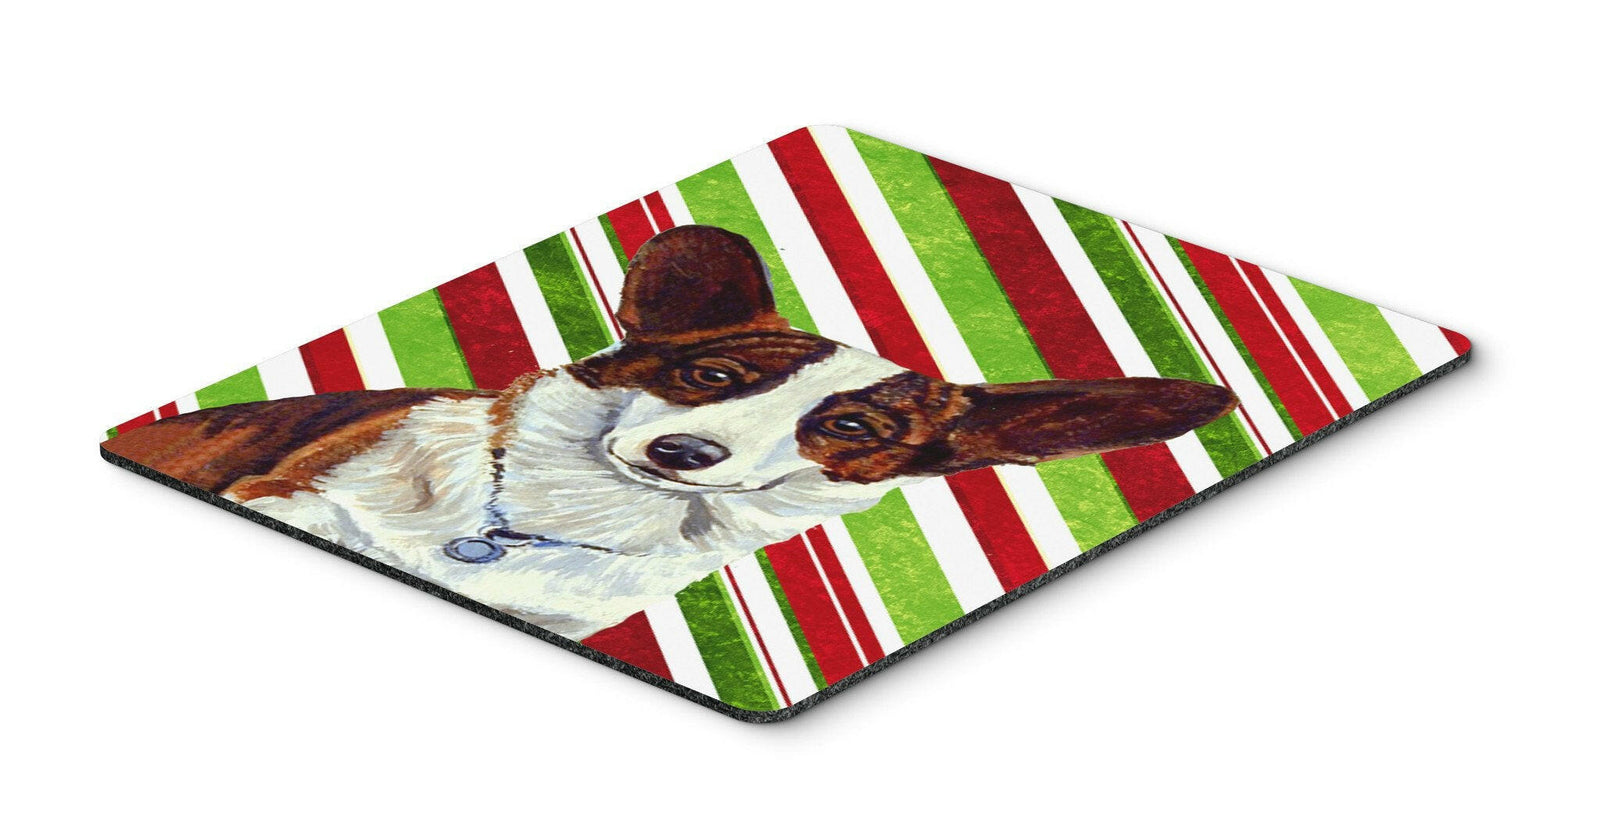 Corgi Candy Cane Holiday Christmas Mouse Pad, Hot Pad or Trivet by Caroline's Treasures